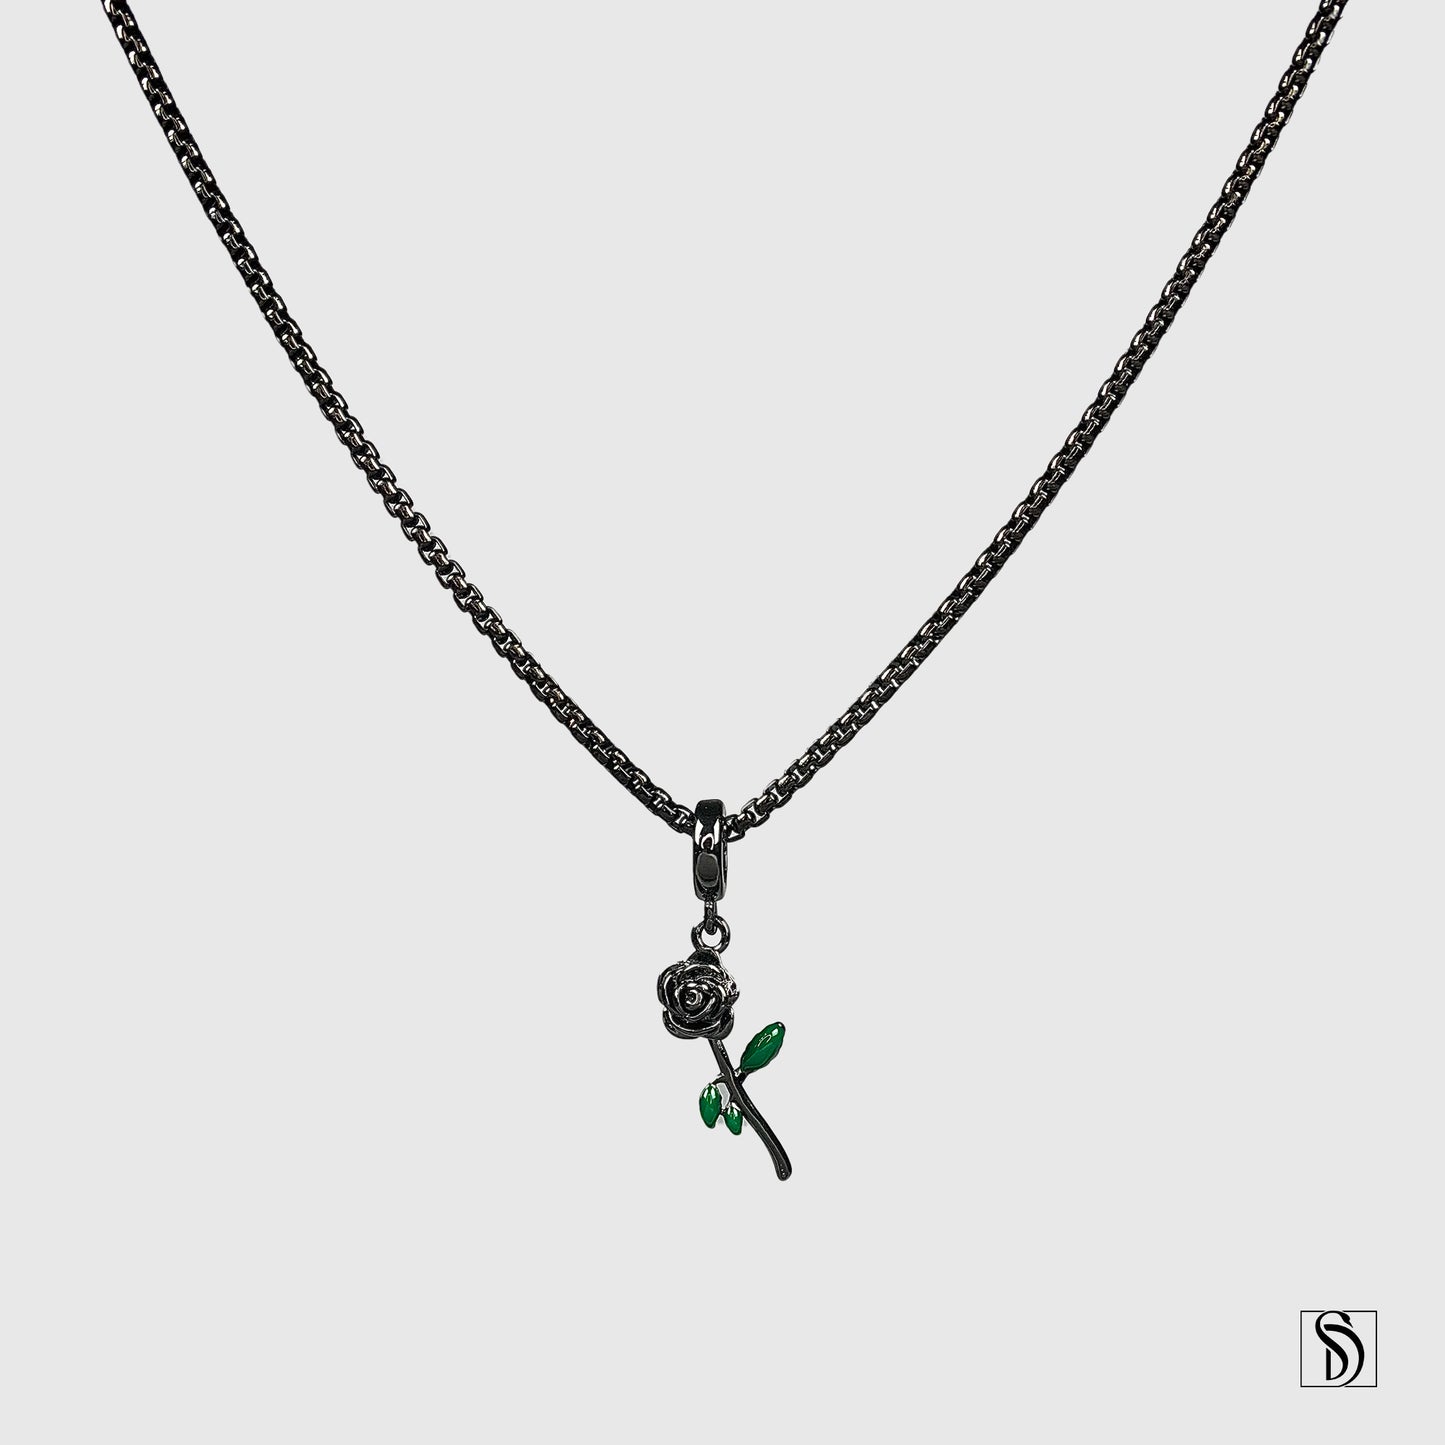 Black Rose Pendant Necklace